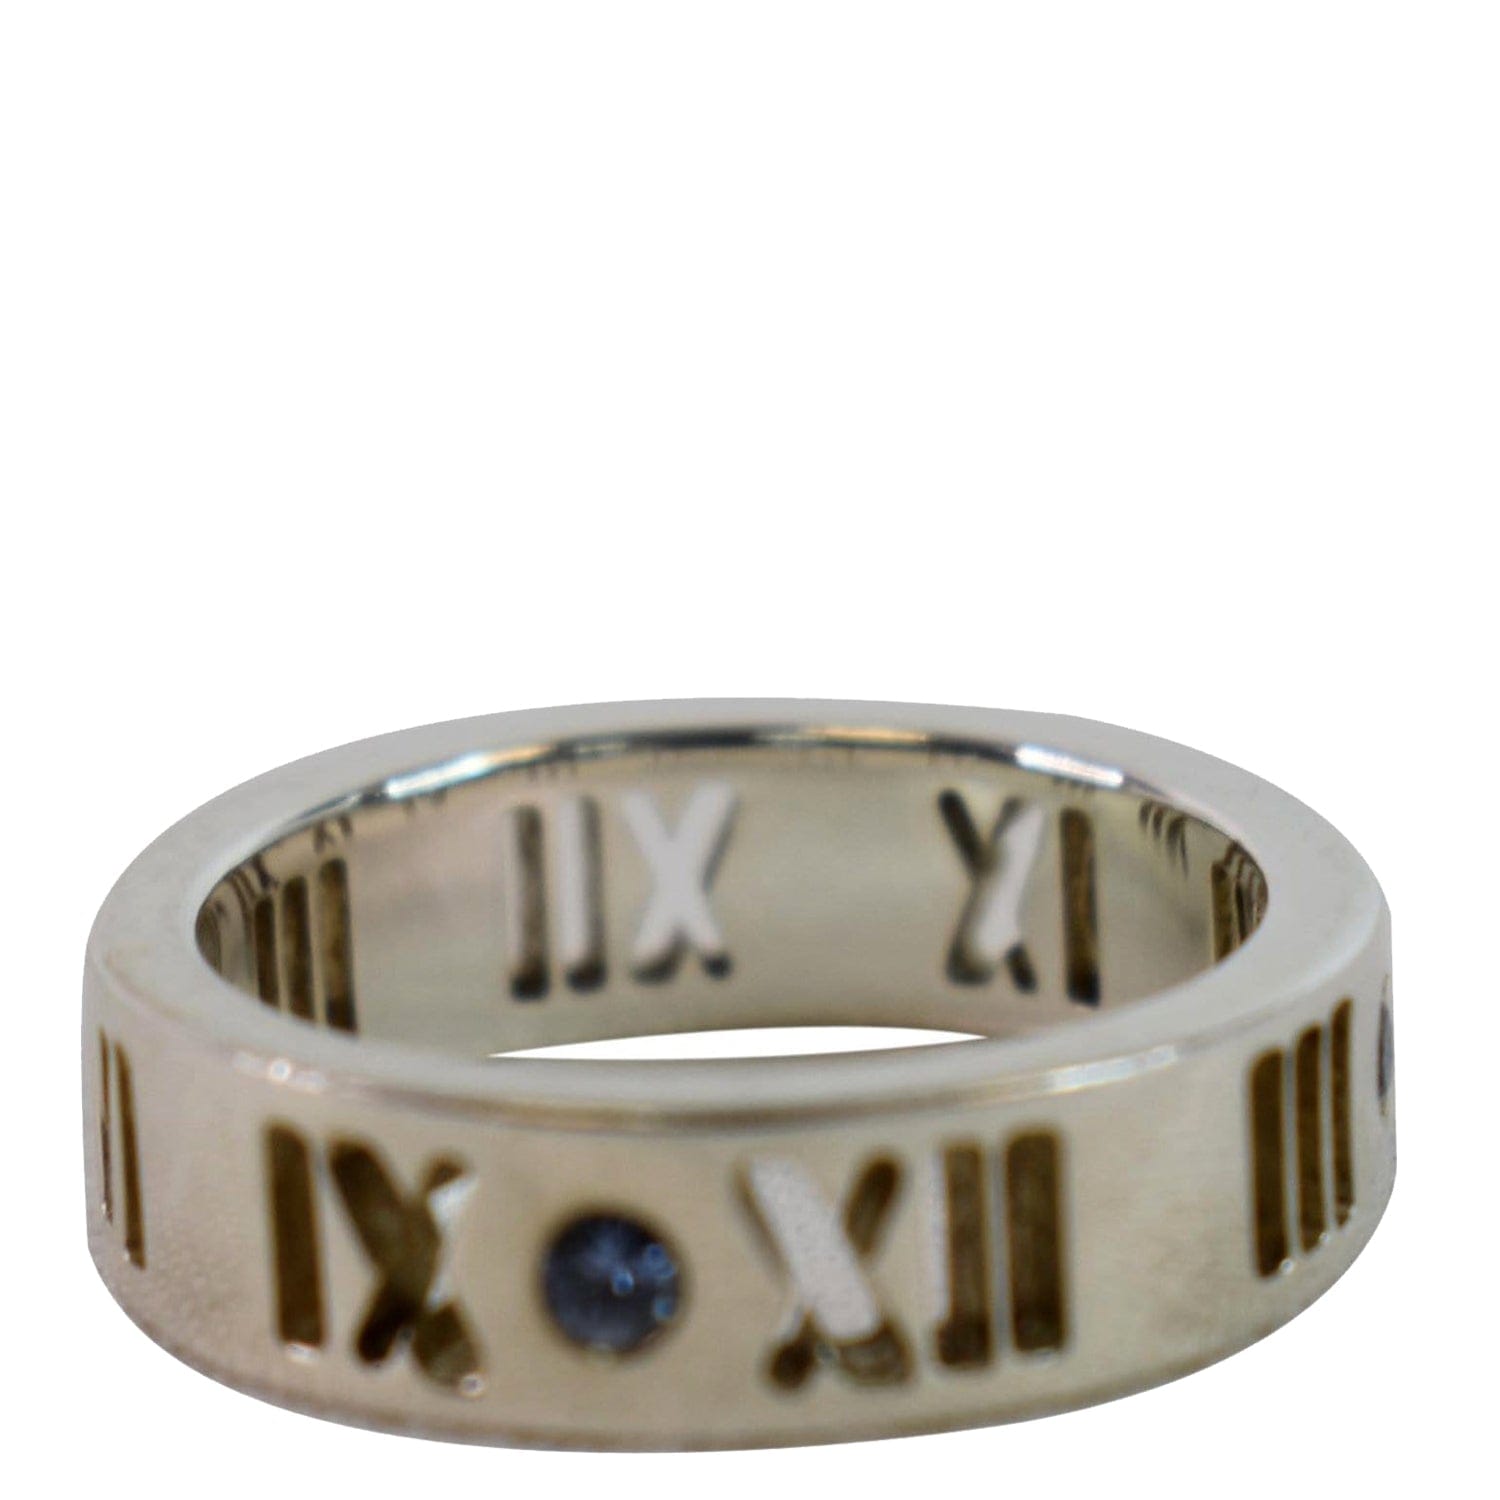 Tiffany & Co. Atlas Roman Numeral Ring